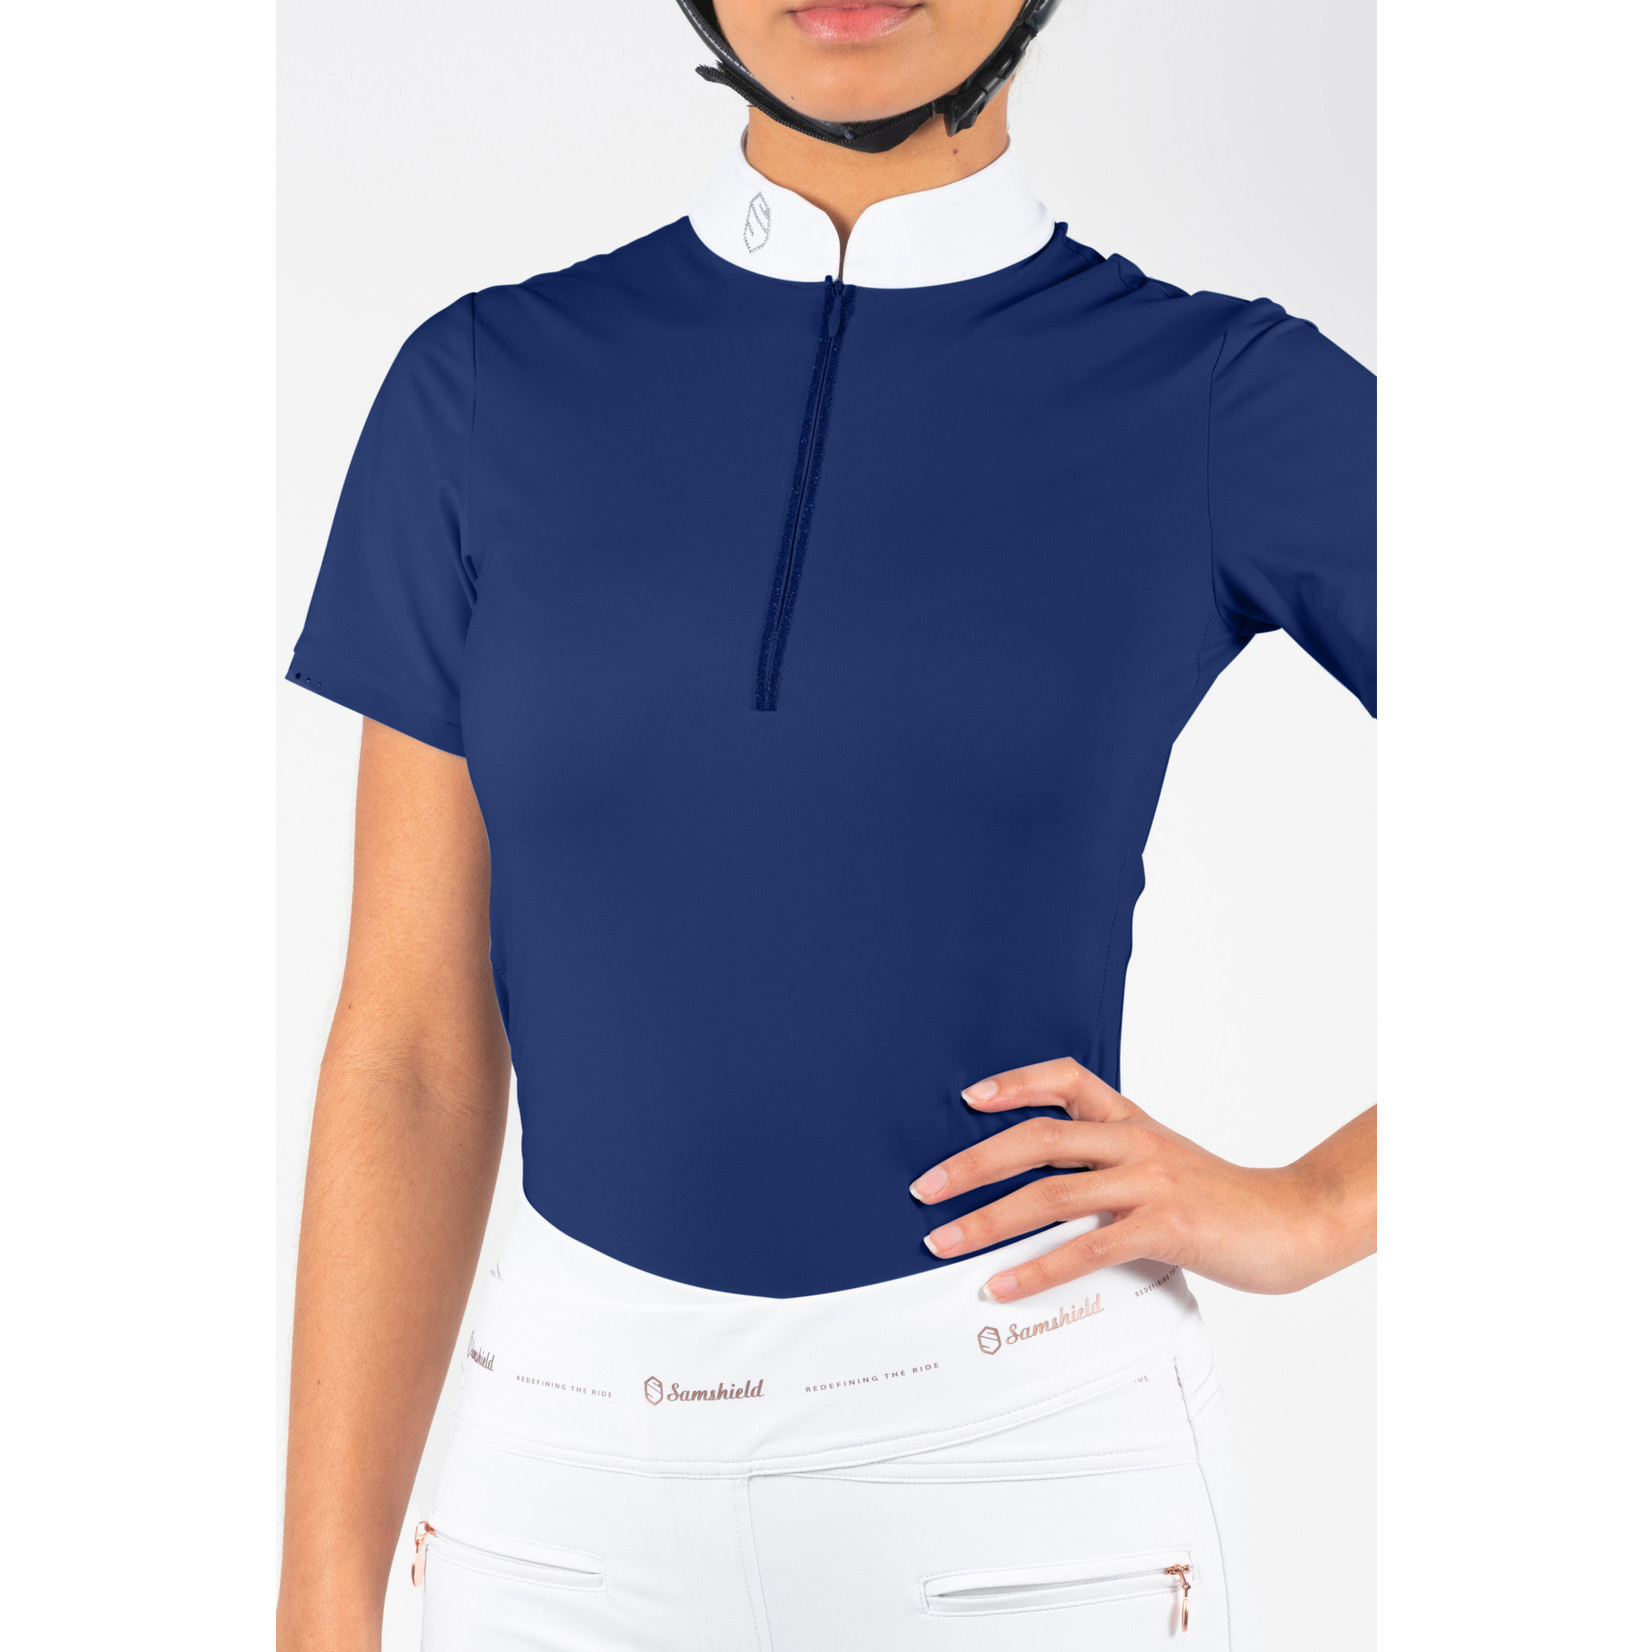 Samshield Samshield Aloise Women's Short Sleeve Shirt